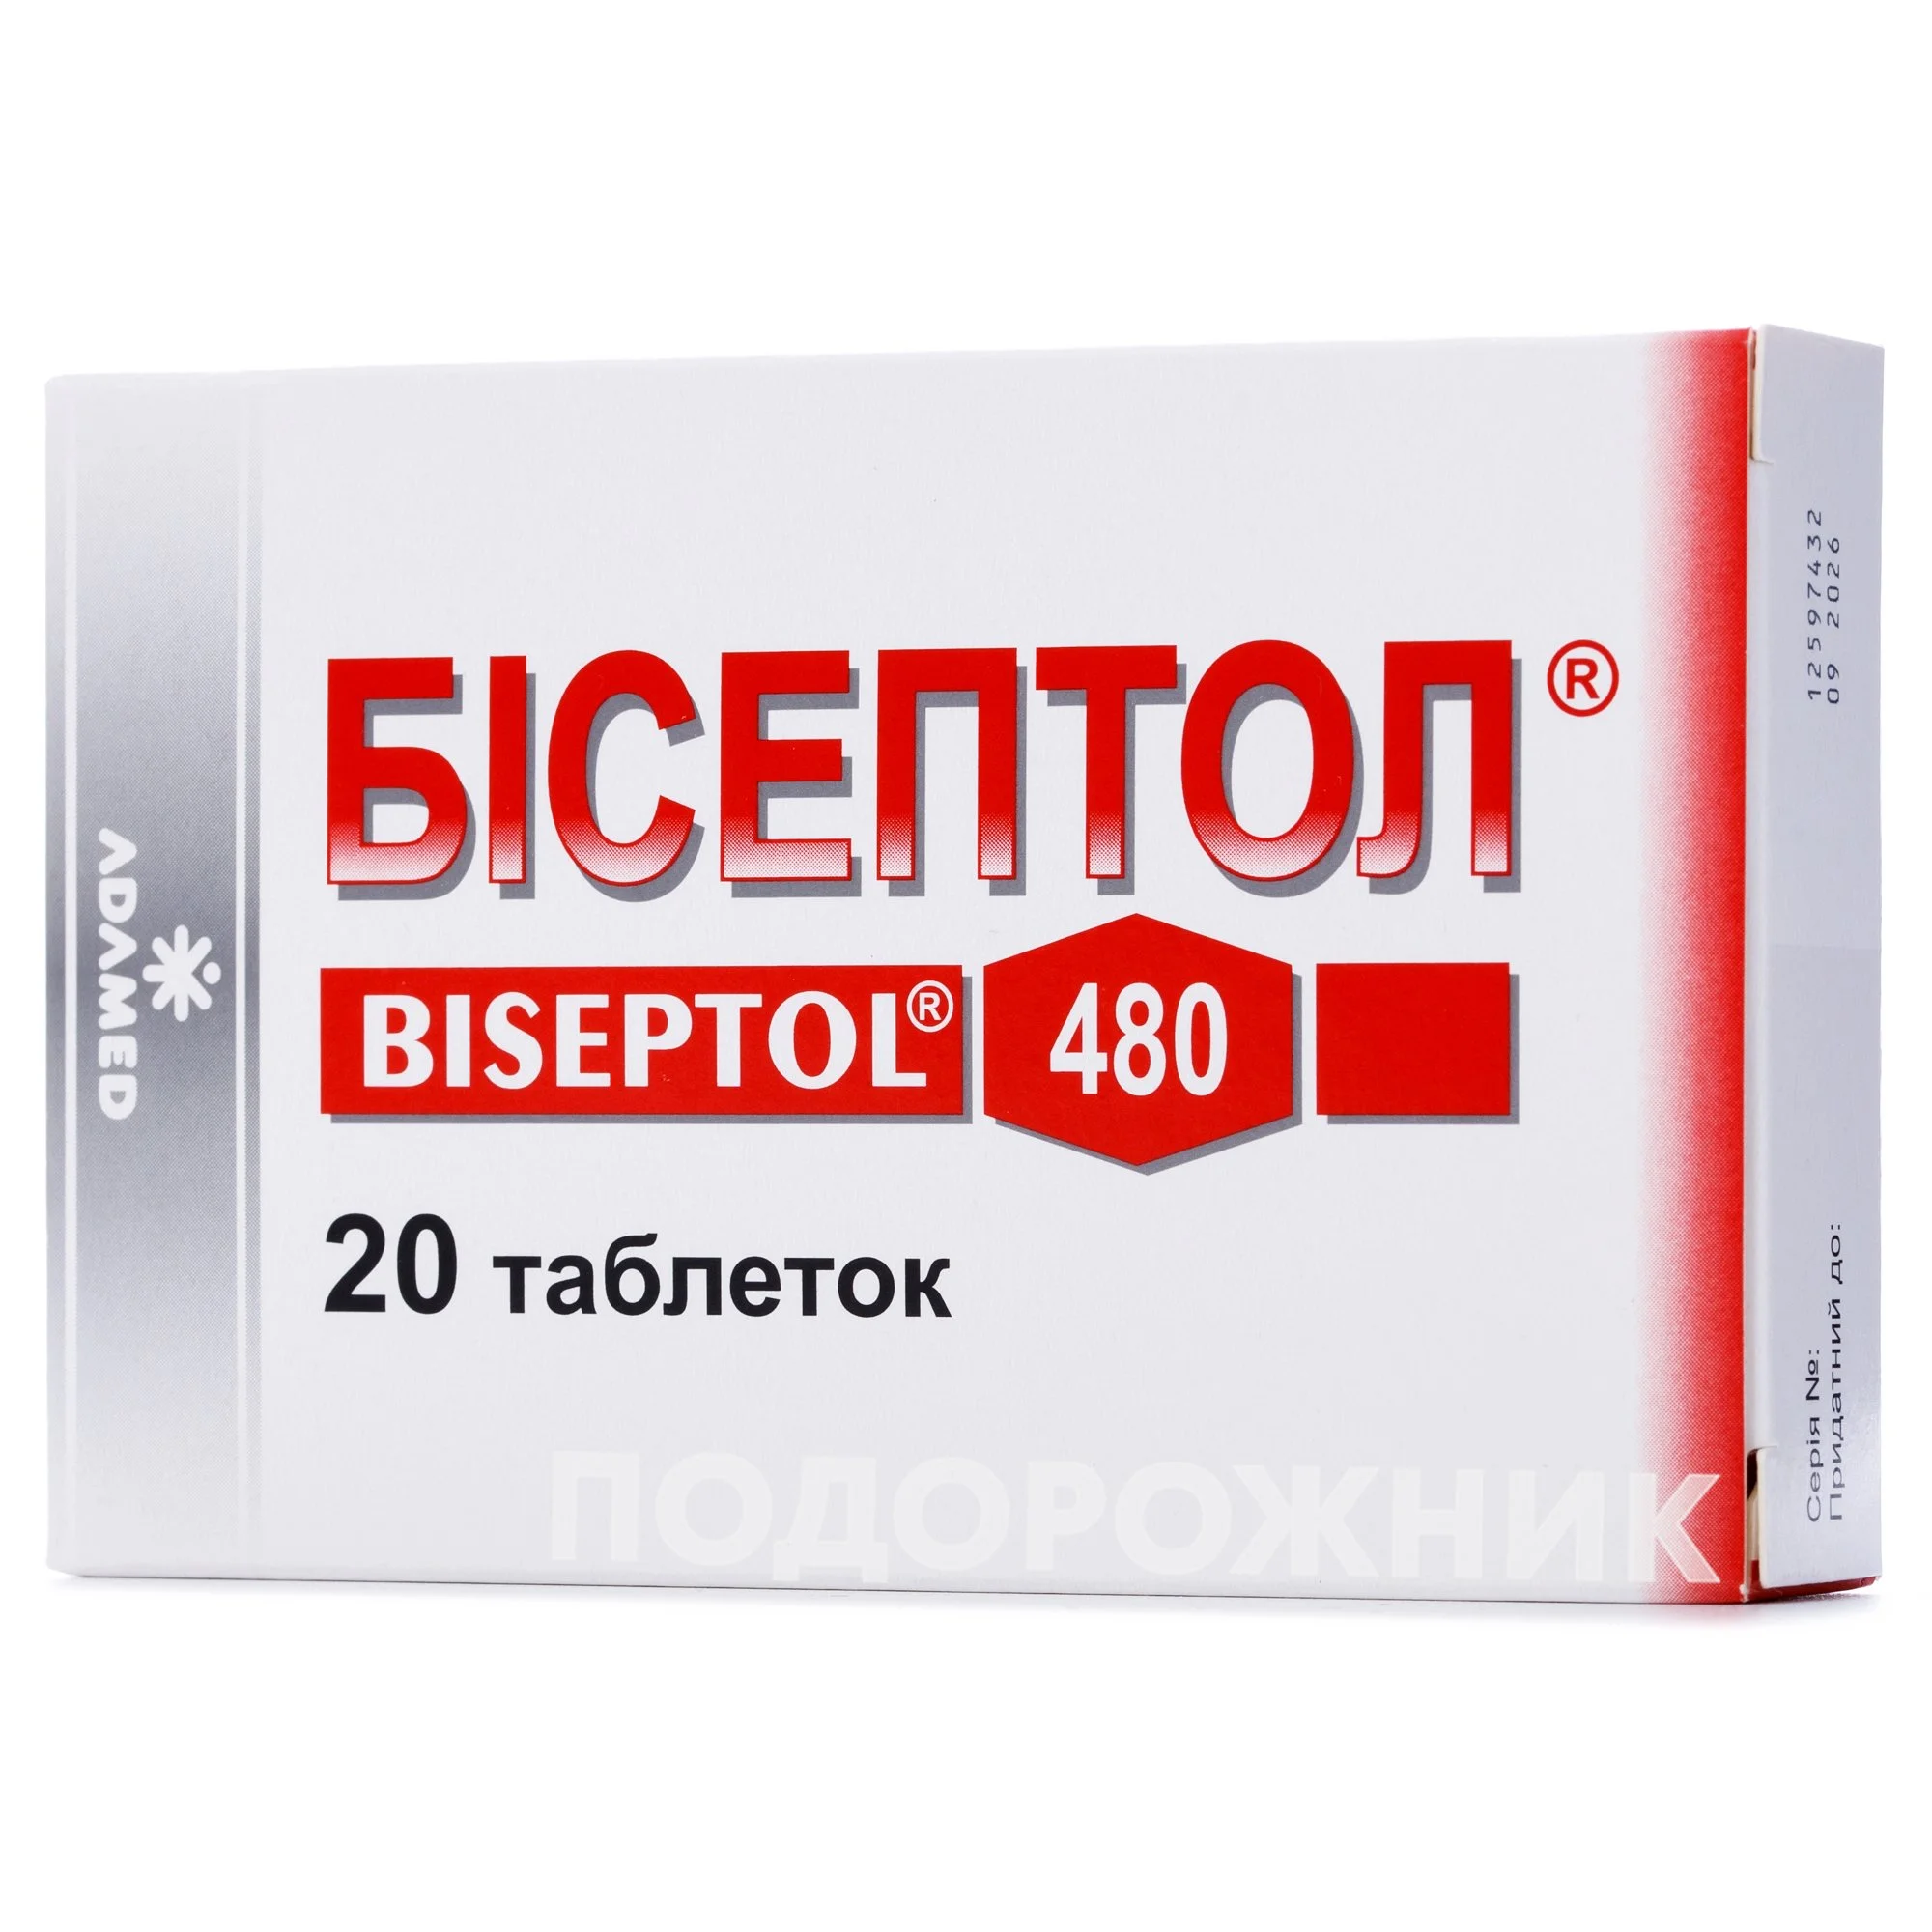 480 миллиграмм. Бисептол 480 таблетки. Бисептол 200 мг. Противовирусное Бисептол. Бисептол комбинированный препарат.